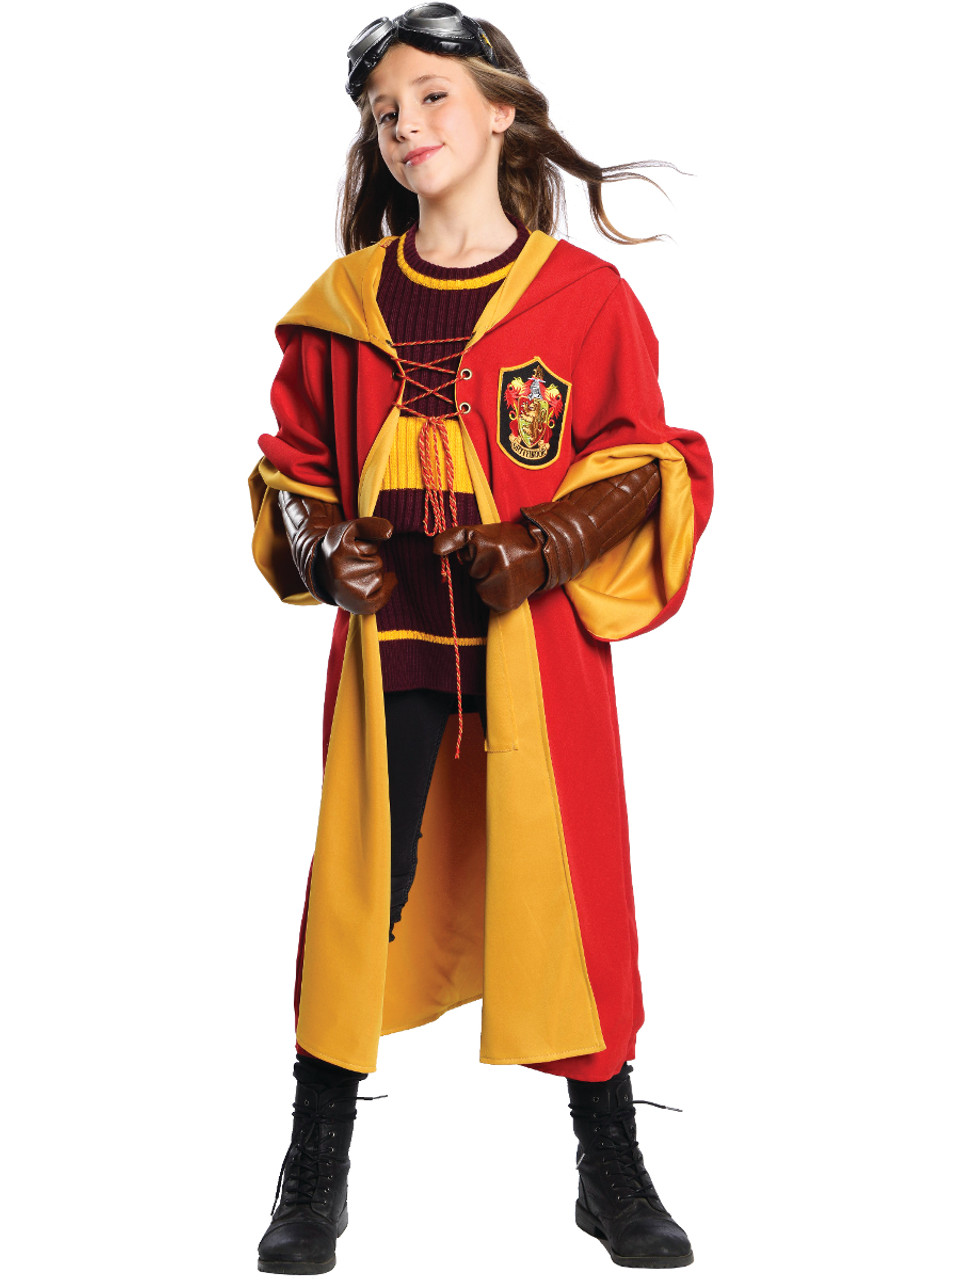 Harry Potter Gryffindor Quidditch Robes Costume